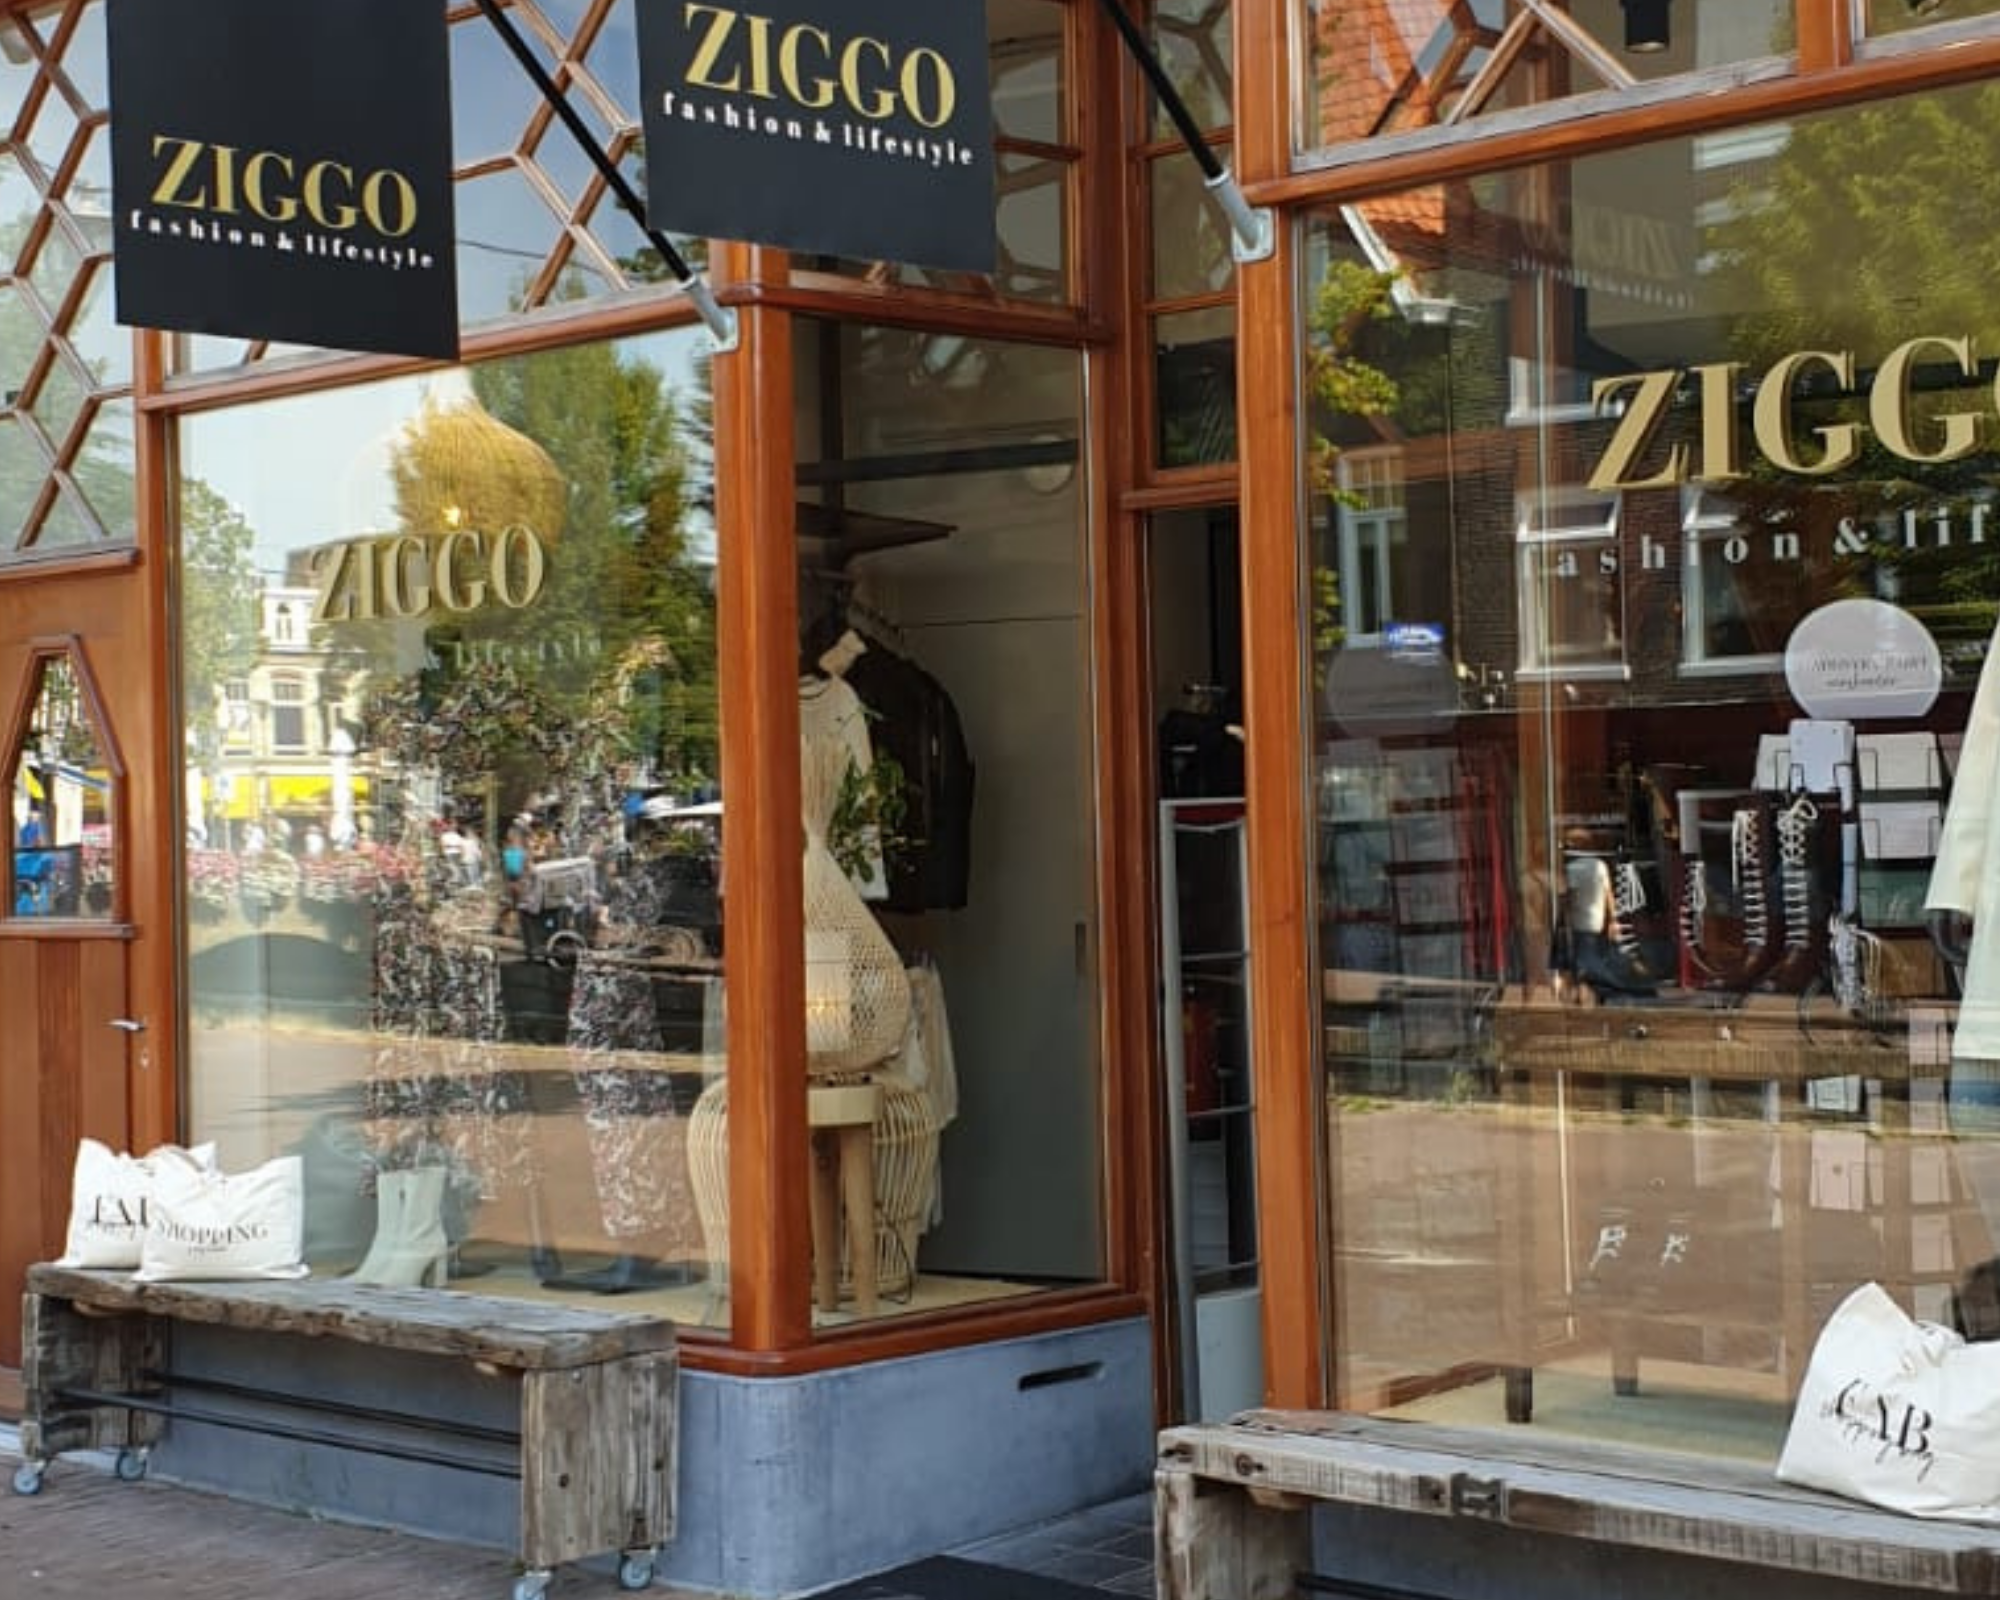 Ziggo Fashion & Lifestyle winkel in Sneek